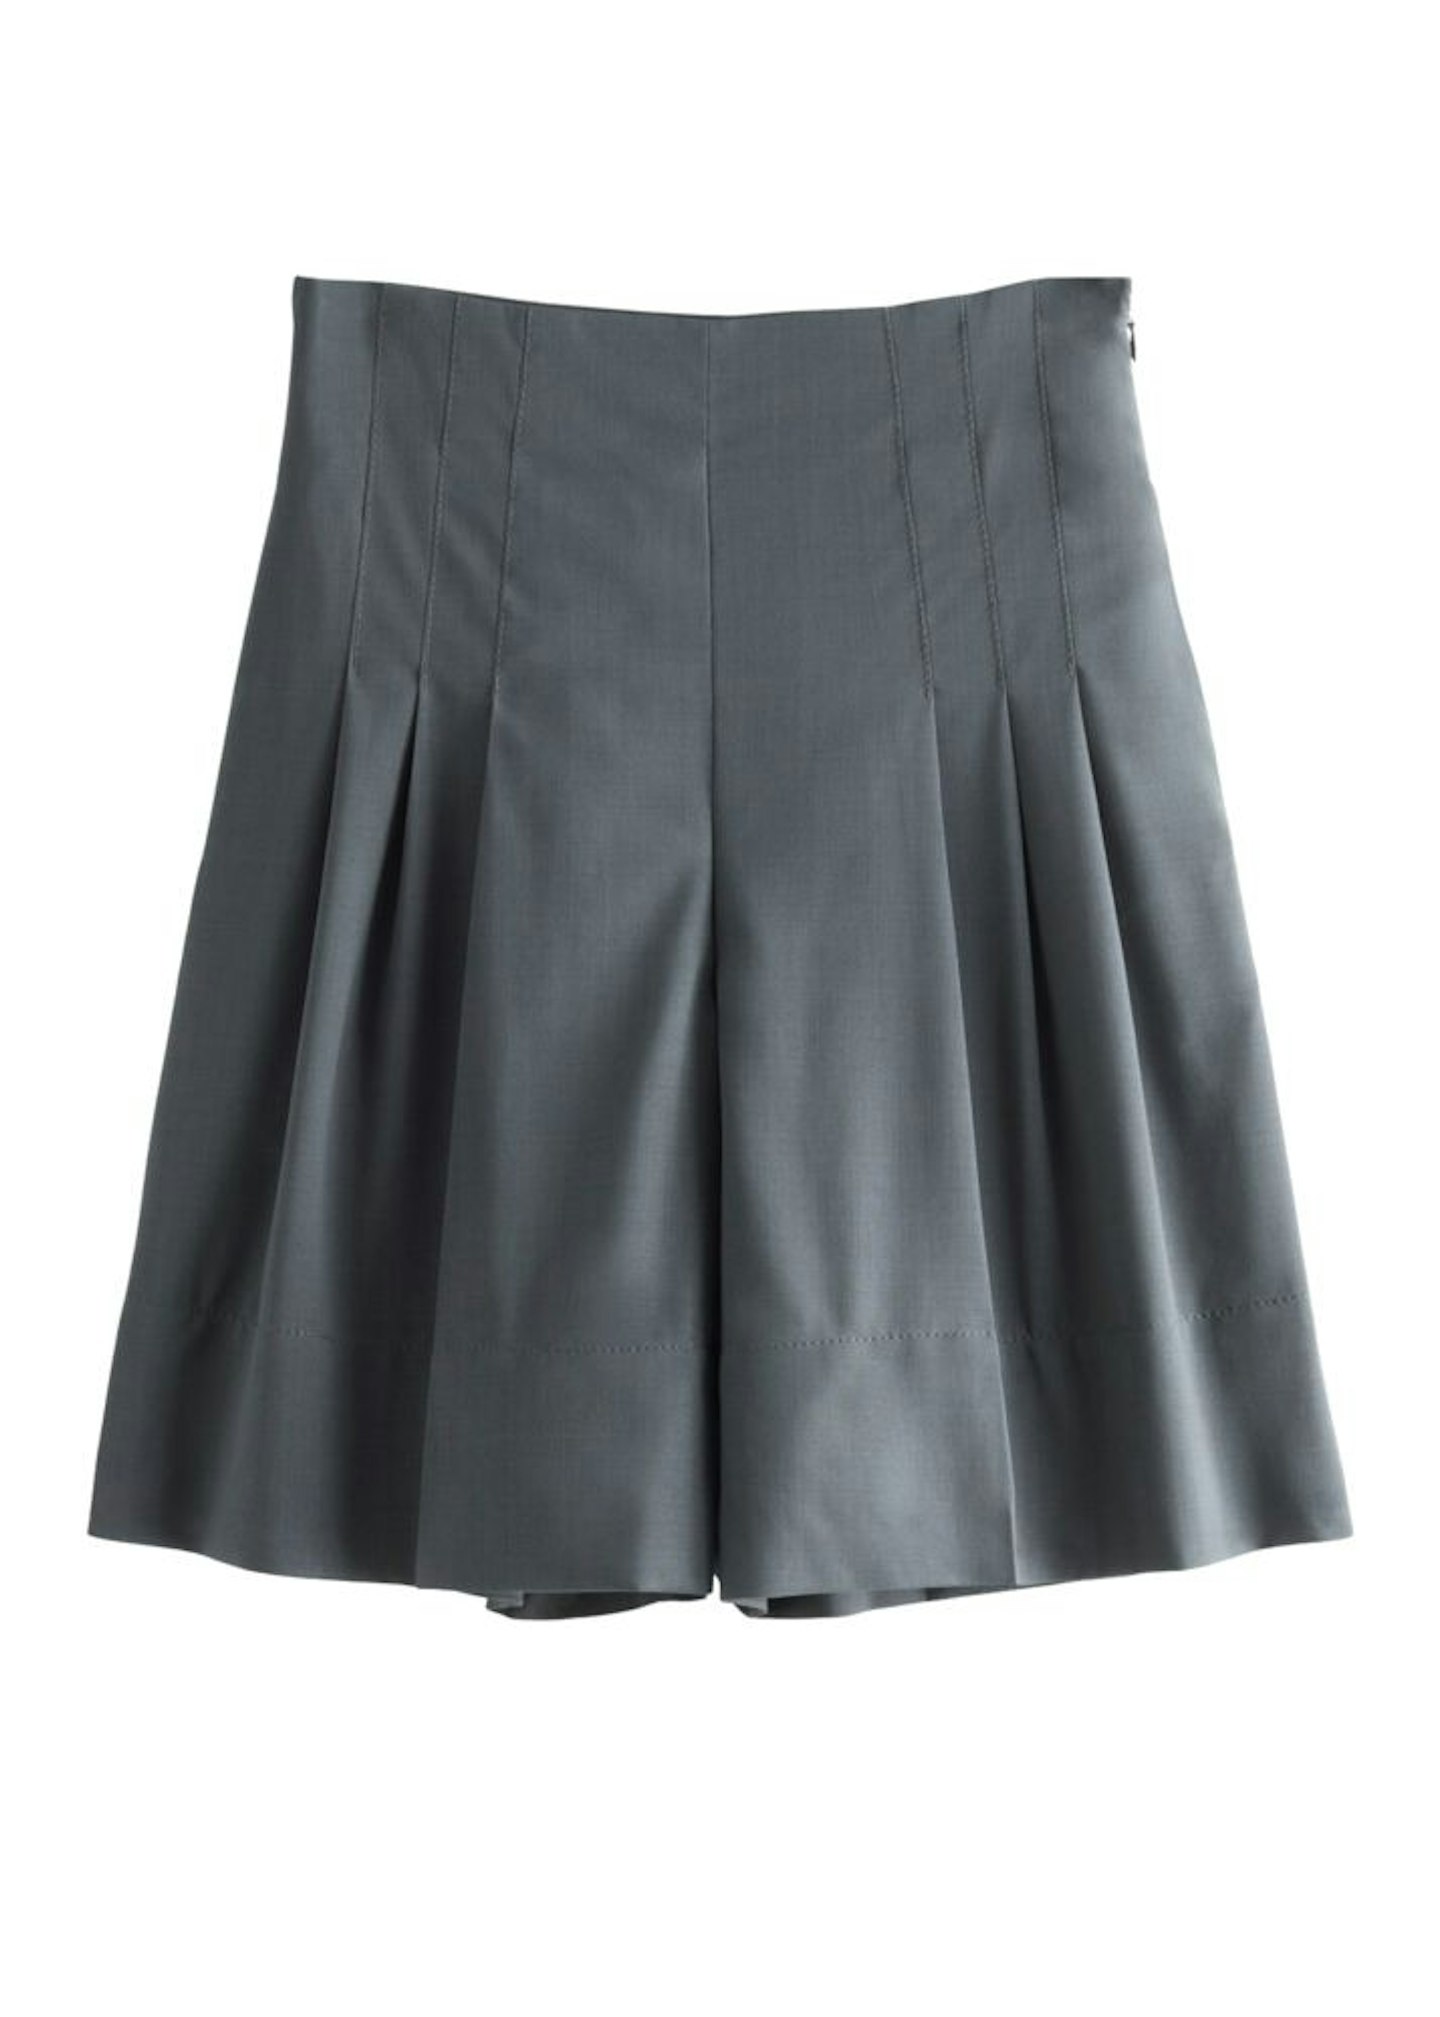 Rejina Pyo & Other Stories, Grey Shorts, £85